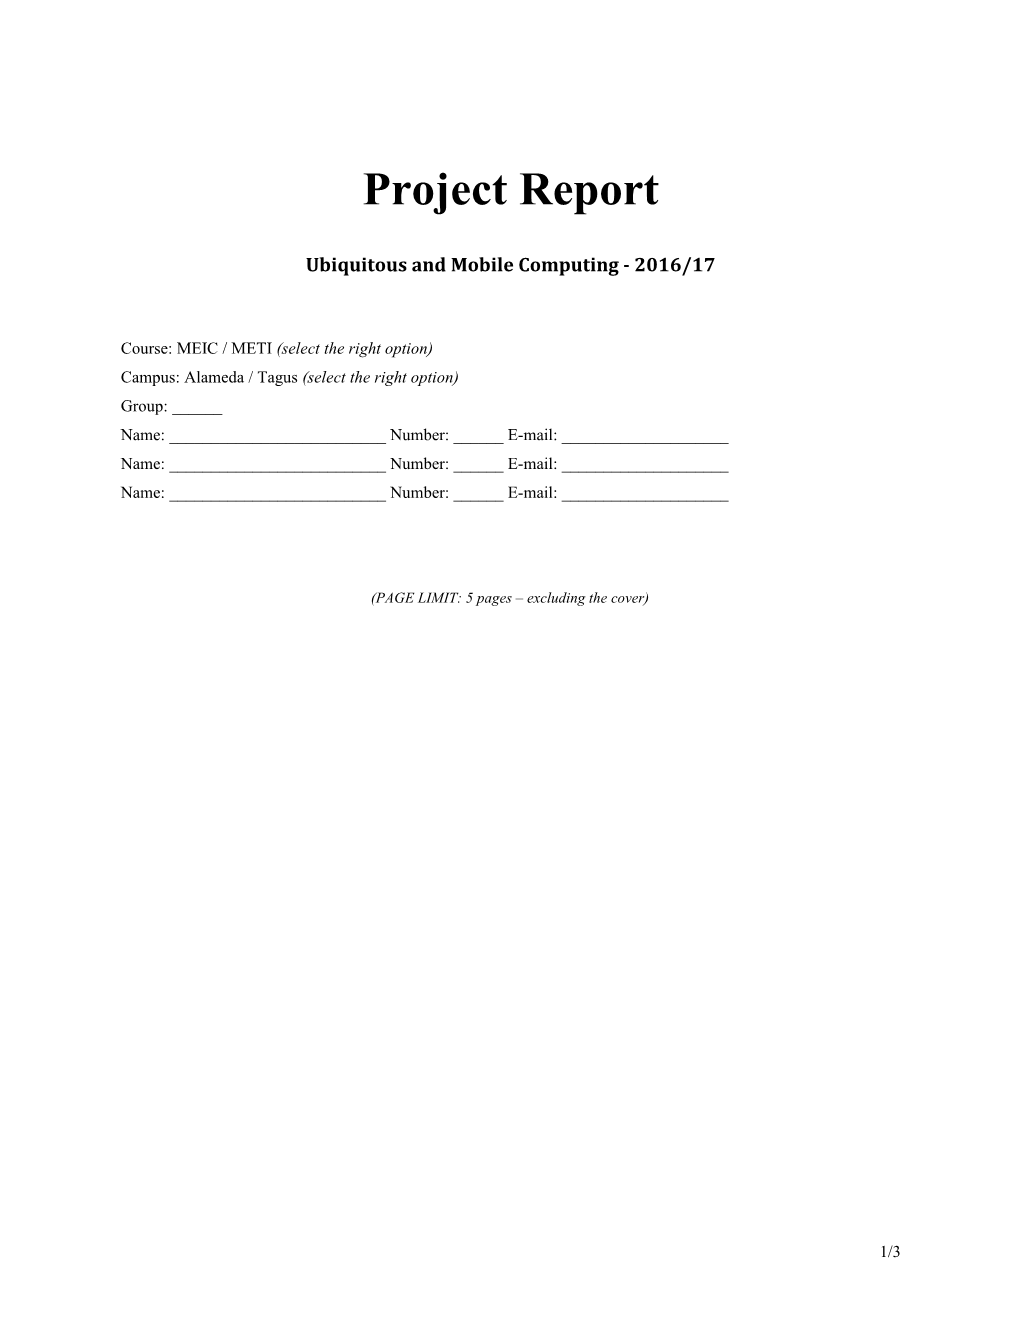 2013-03-05 - CM - Report Template - #0.2